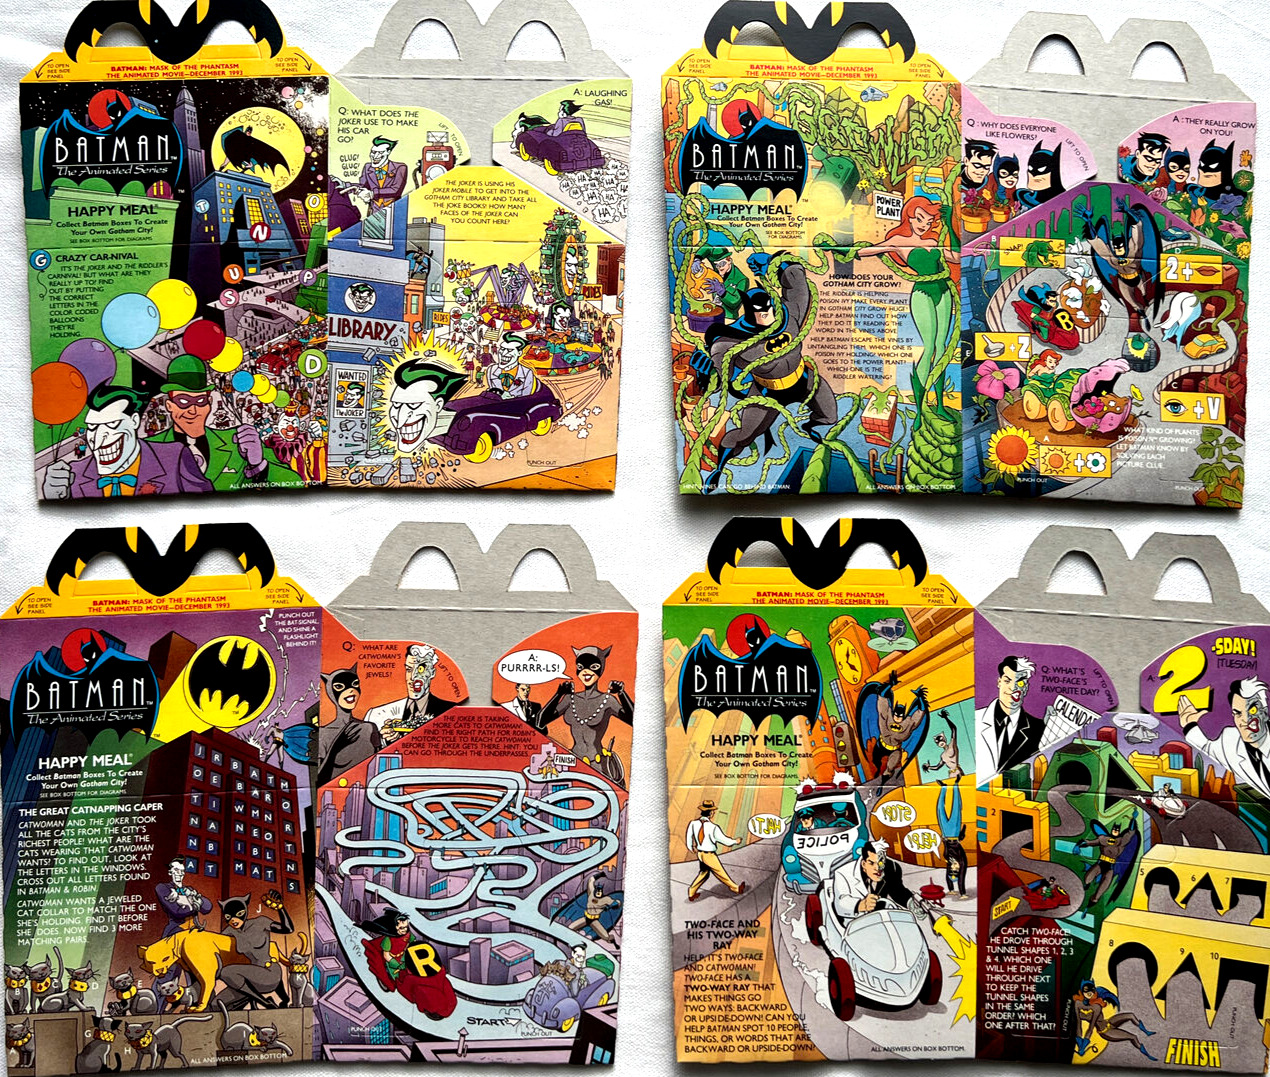 Complete Set of 4 , 1993 McDonald’s/Batman Happy Meal Boxes - BRAND NEW, MINT